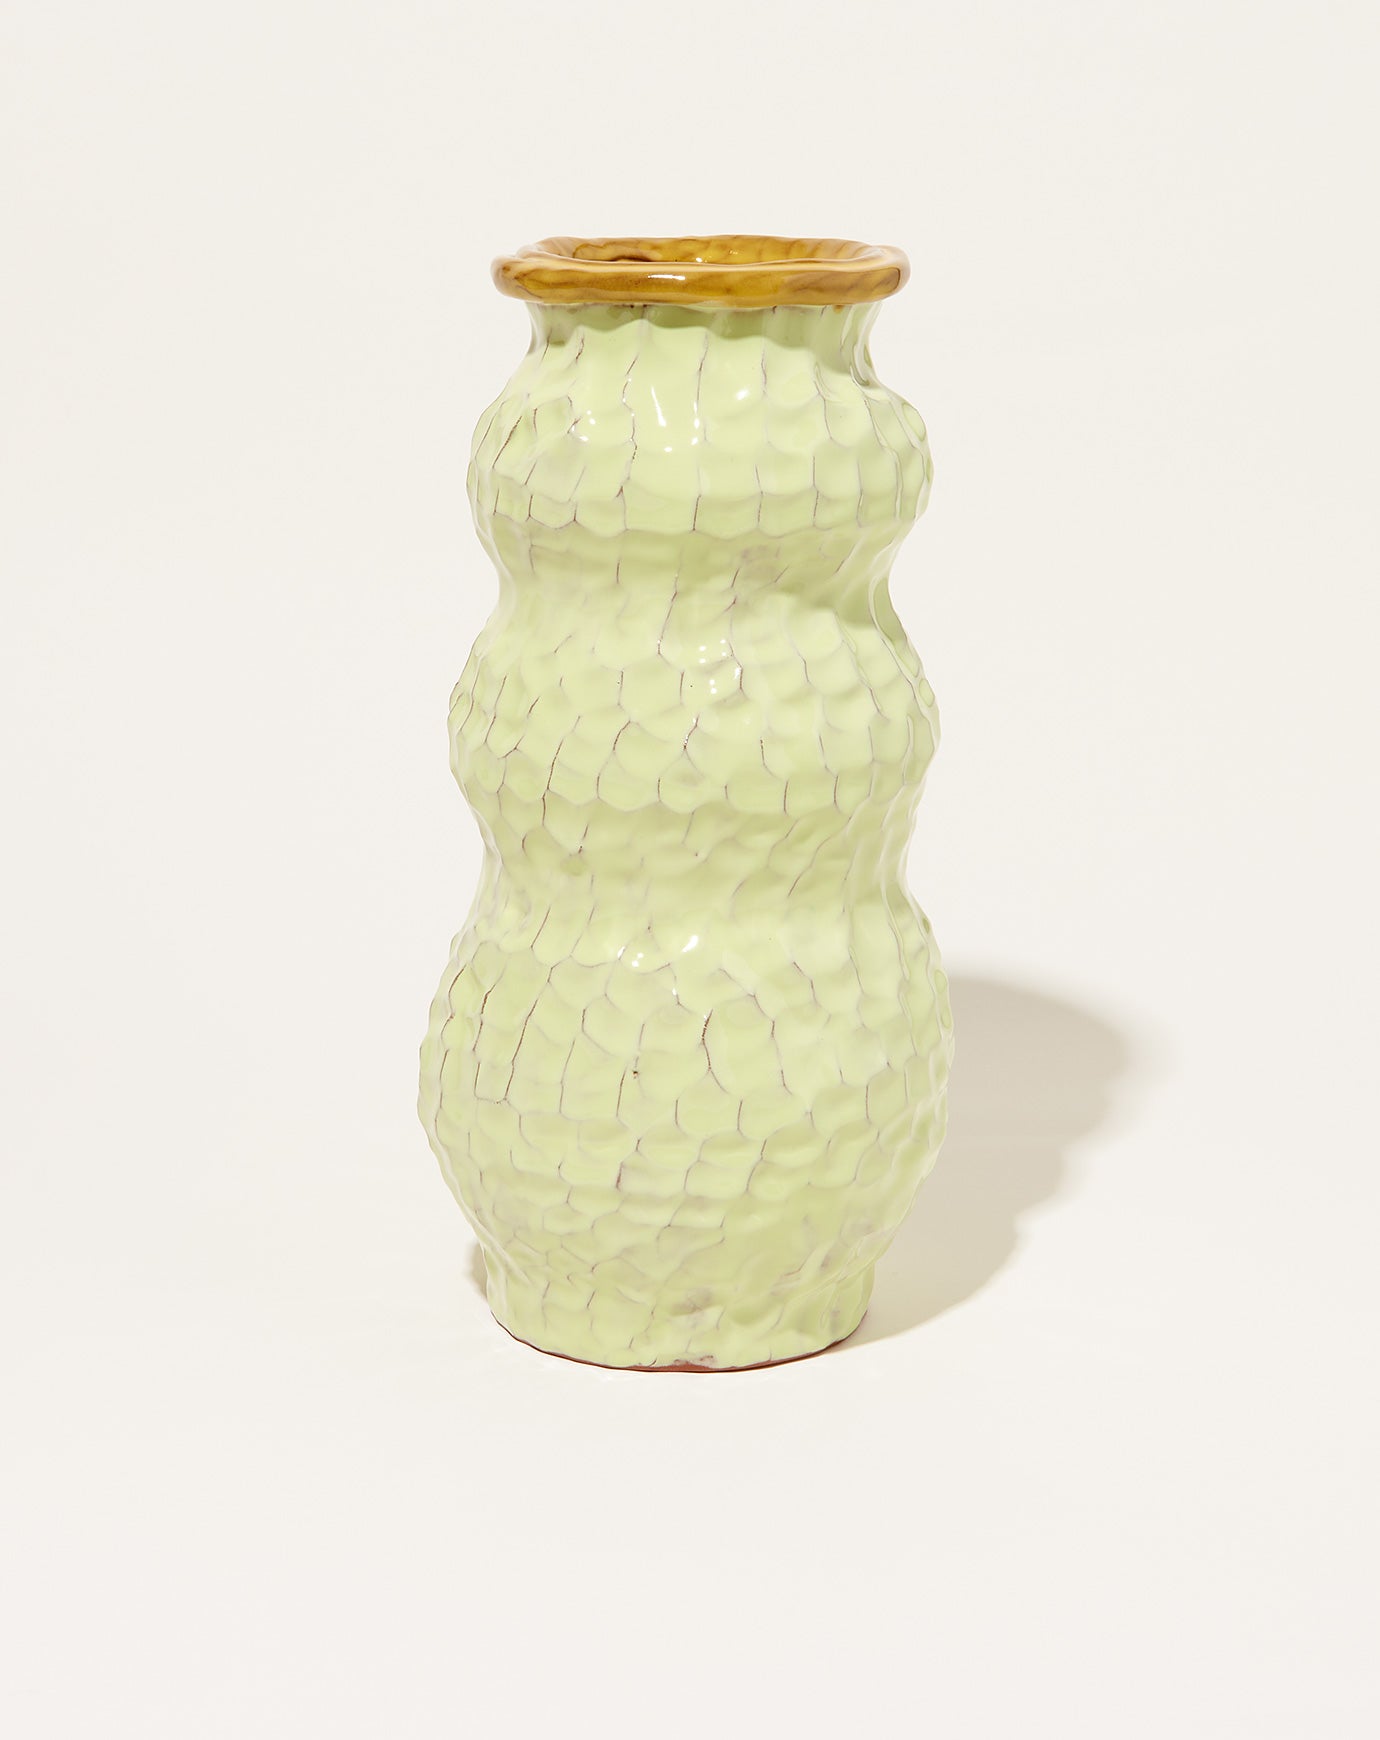 Sean Gerstley Snowman Vase in Honeydew and Dandelion